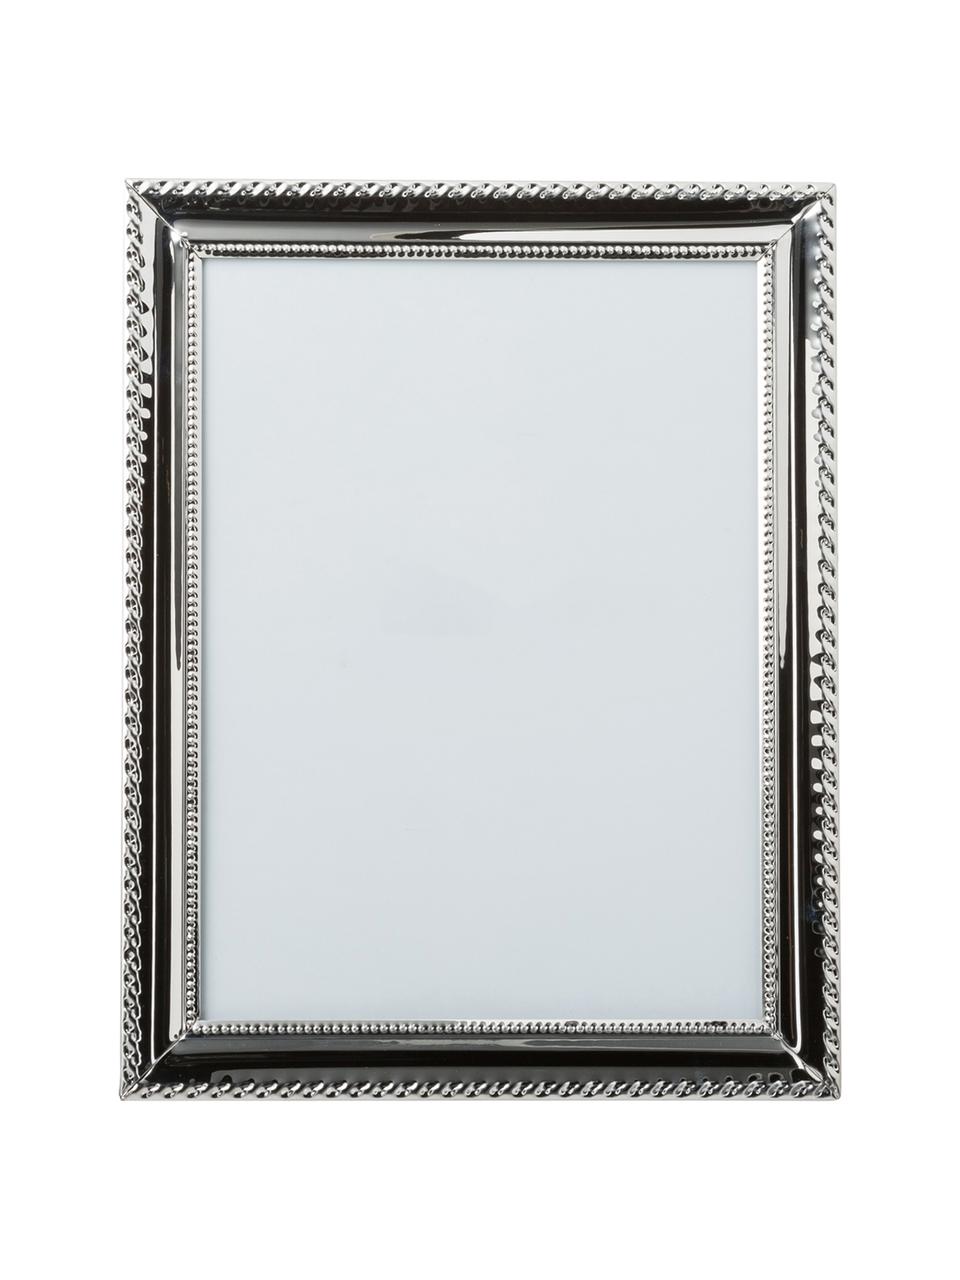 Fotorámeček Julie, Stříbrná, transparentní, 15 cm, 20 cm